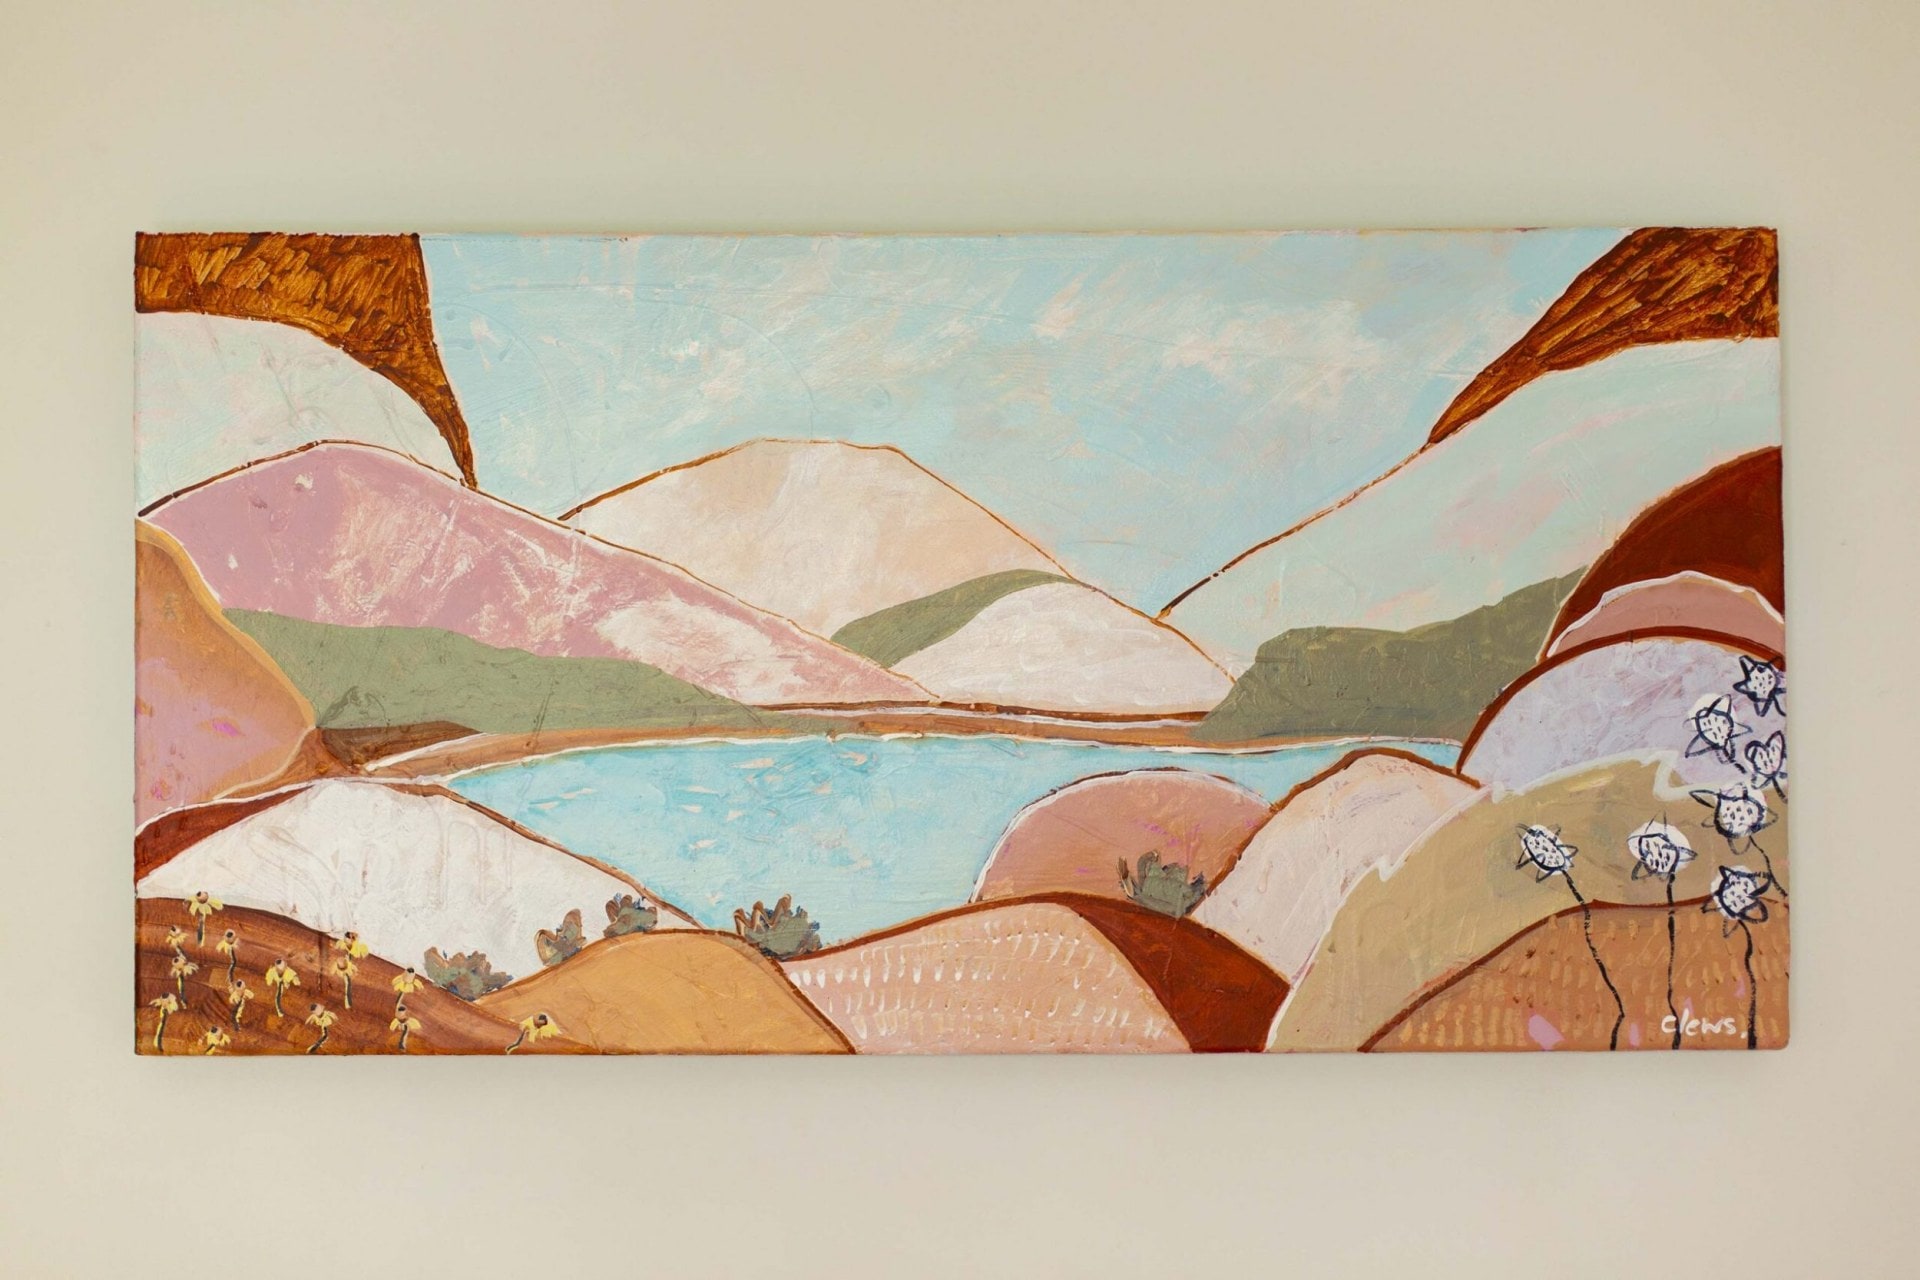 An artwork depicting mountain ranges by Brenda Clews